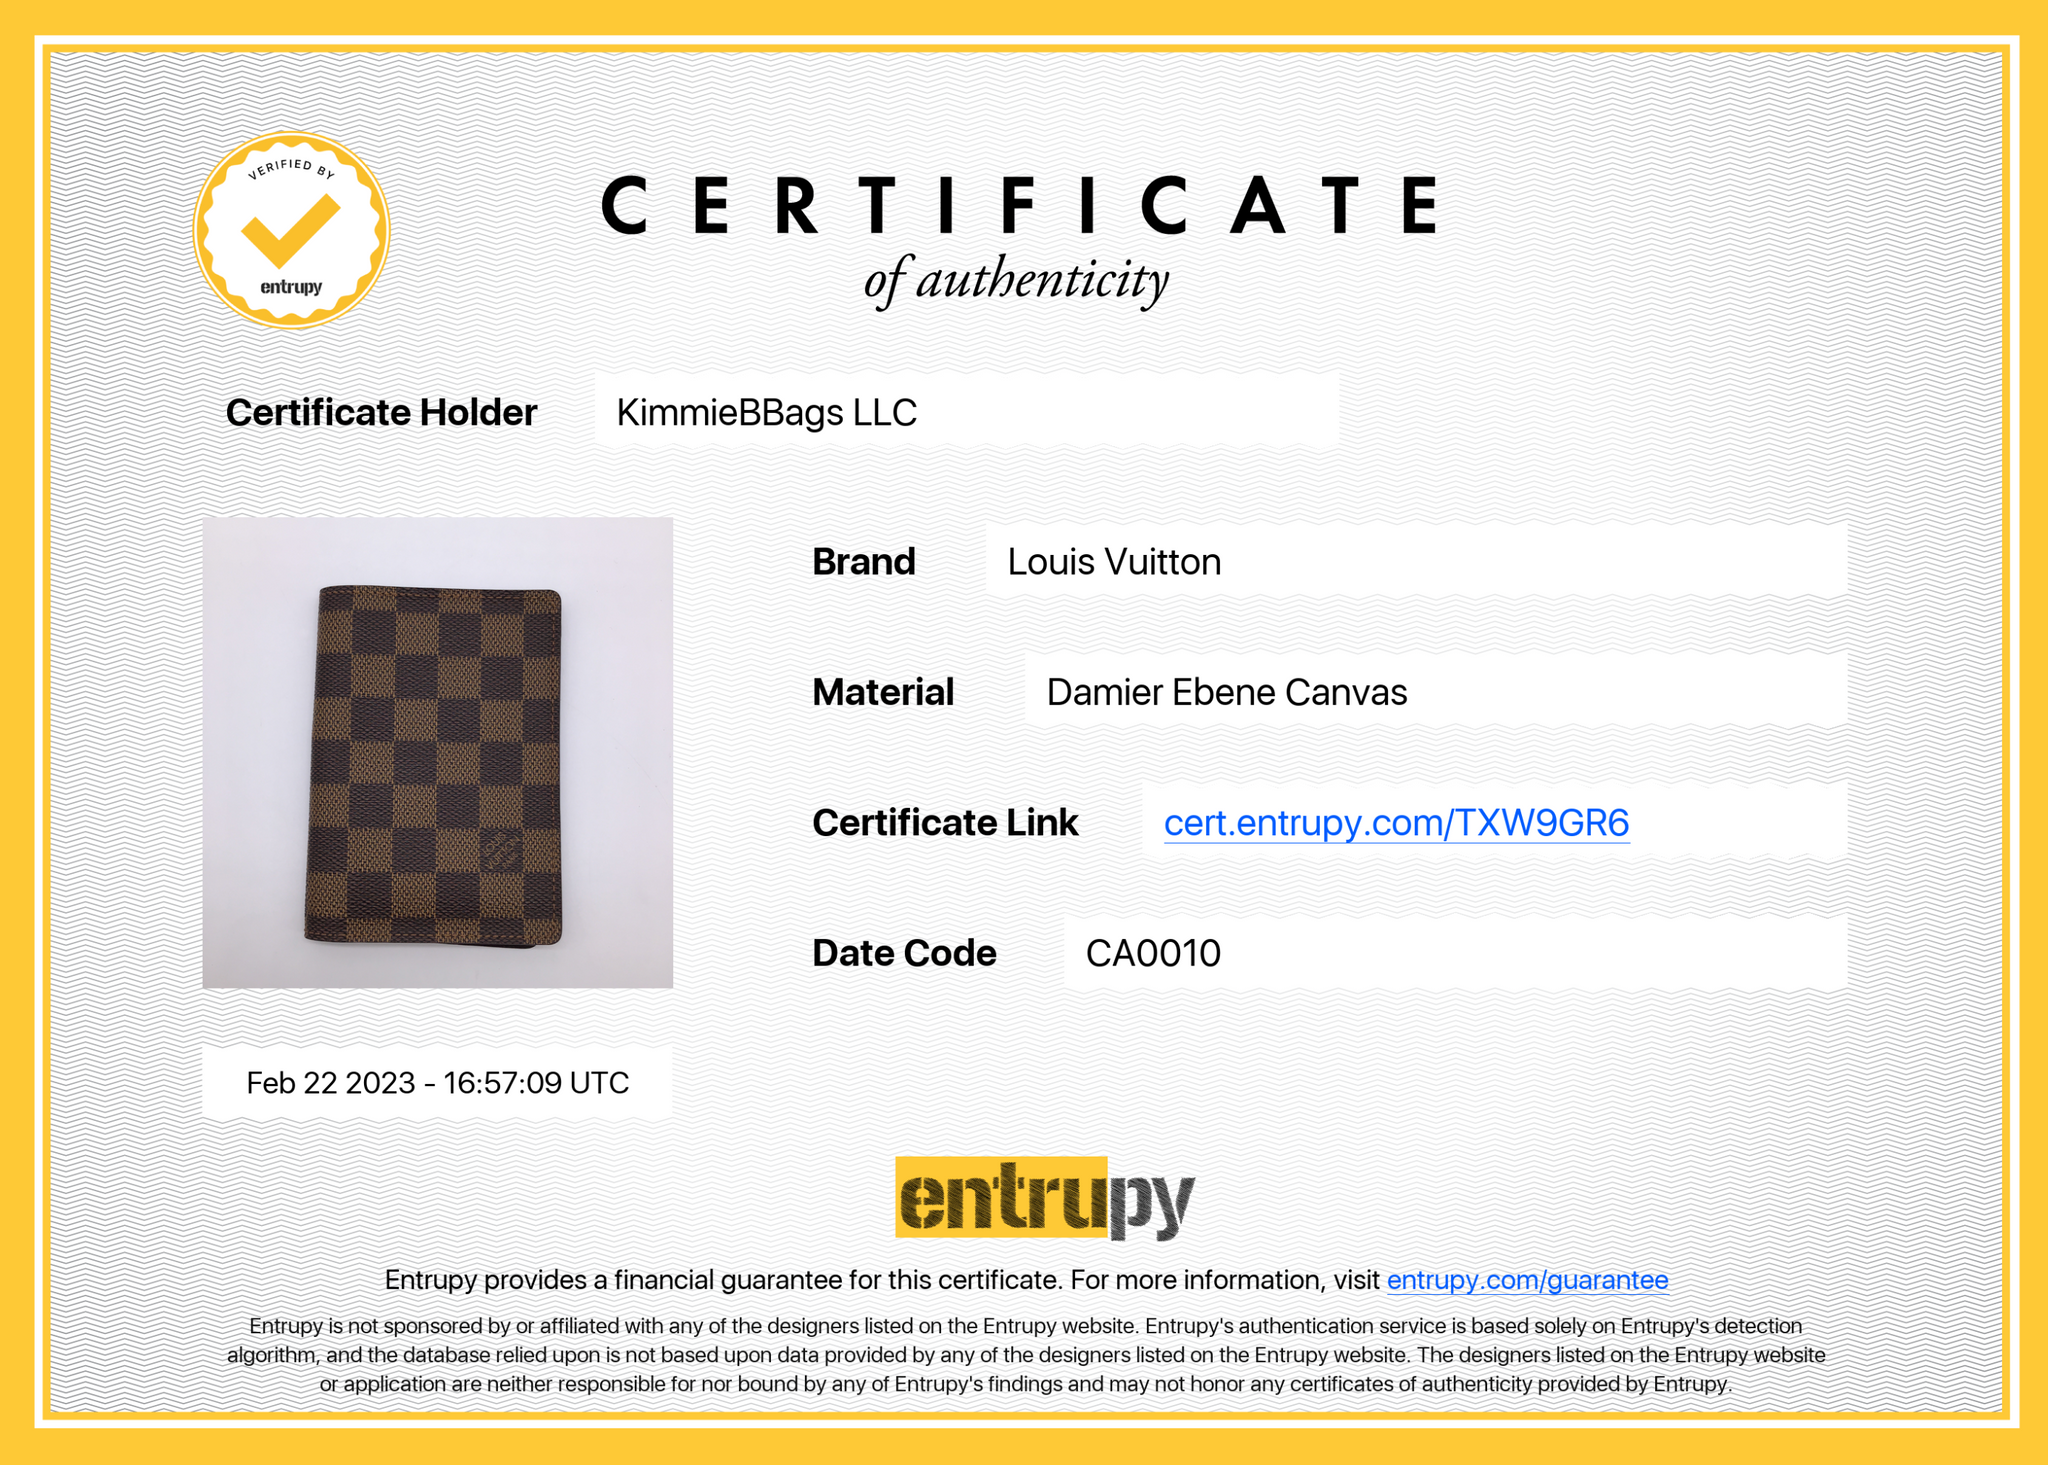 Authentic Louis Vuitton Damier Ebene Small Card Holder